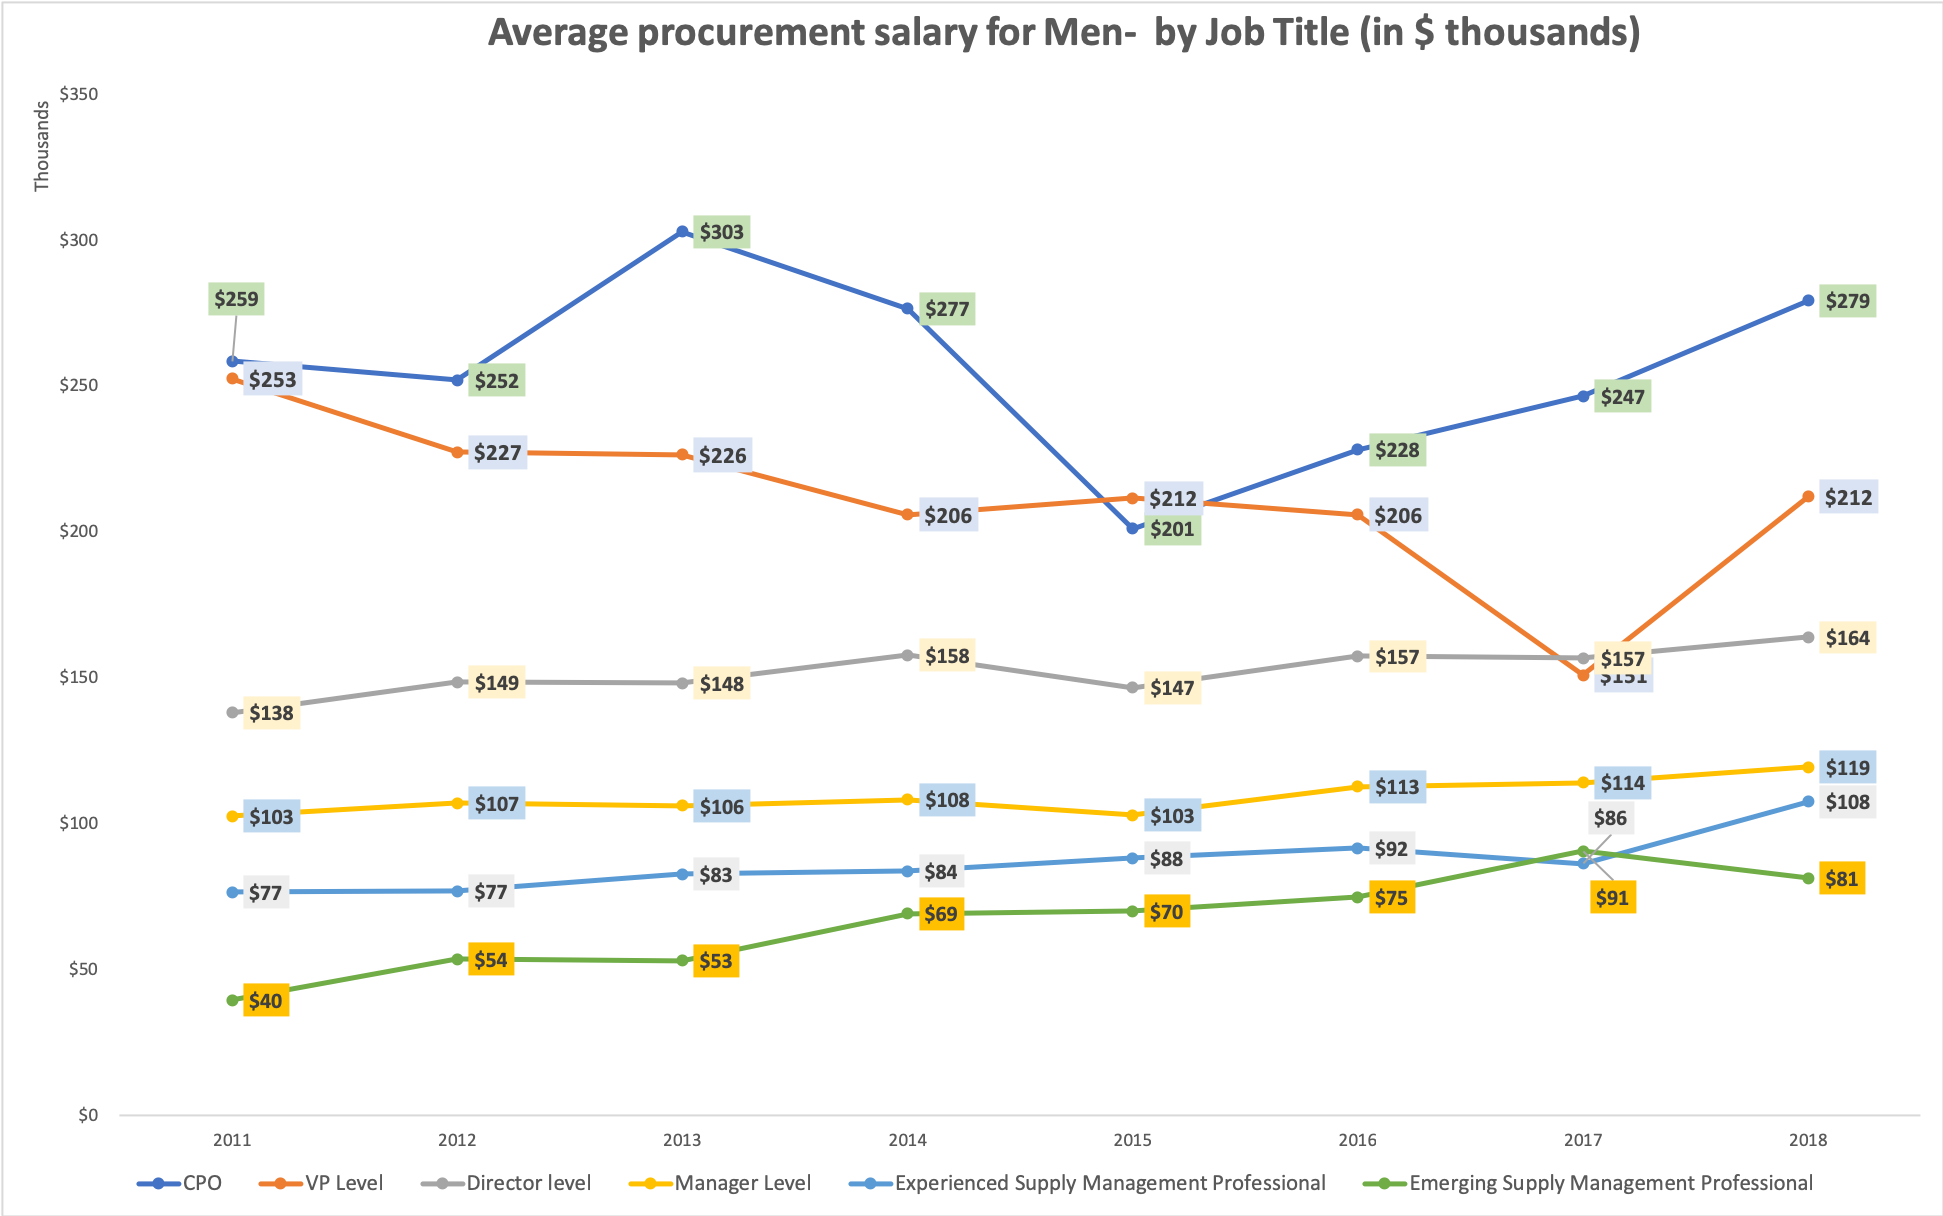 Average salary for procurement - men